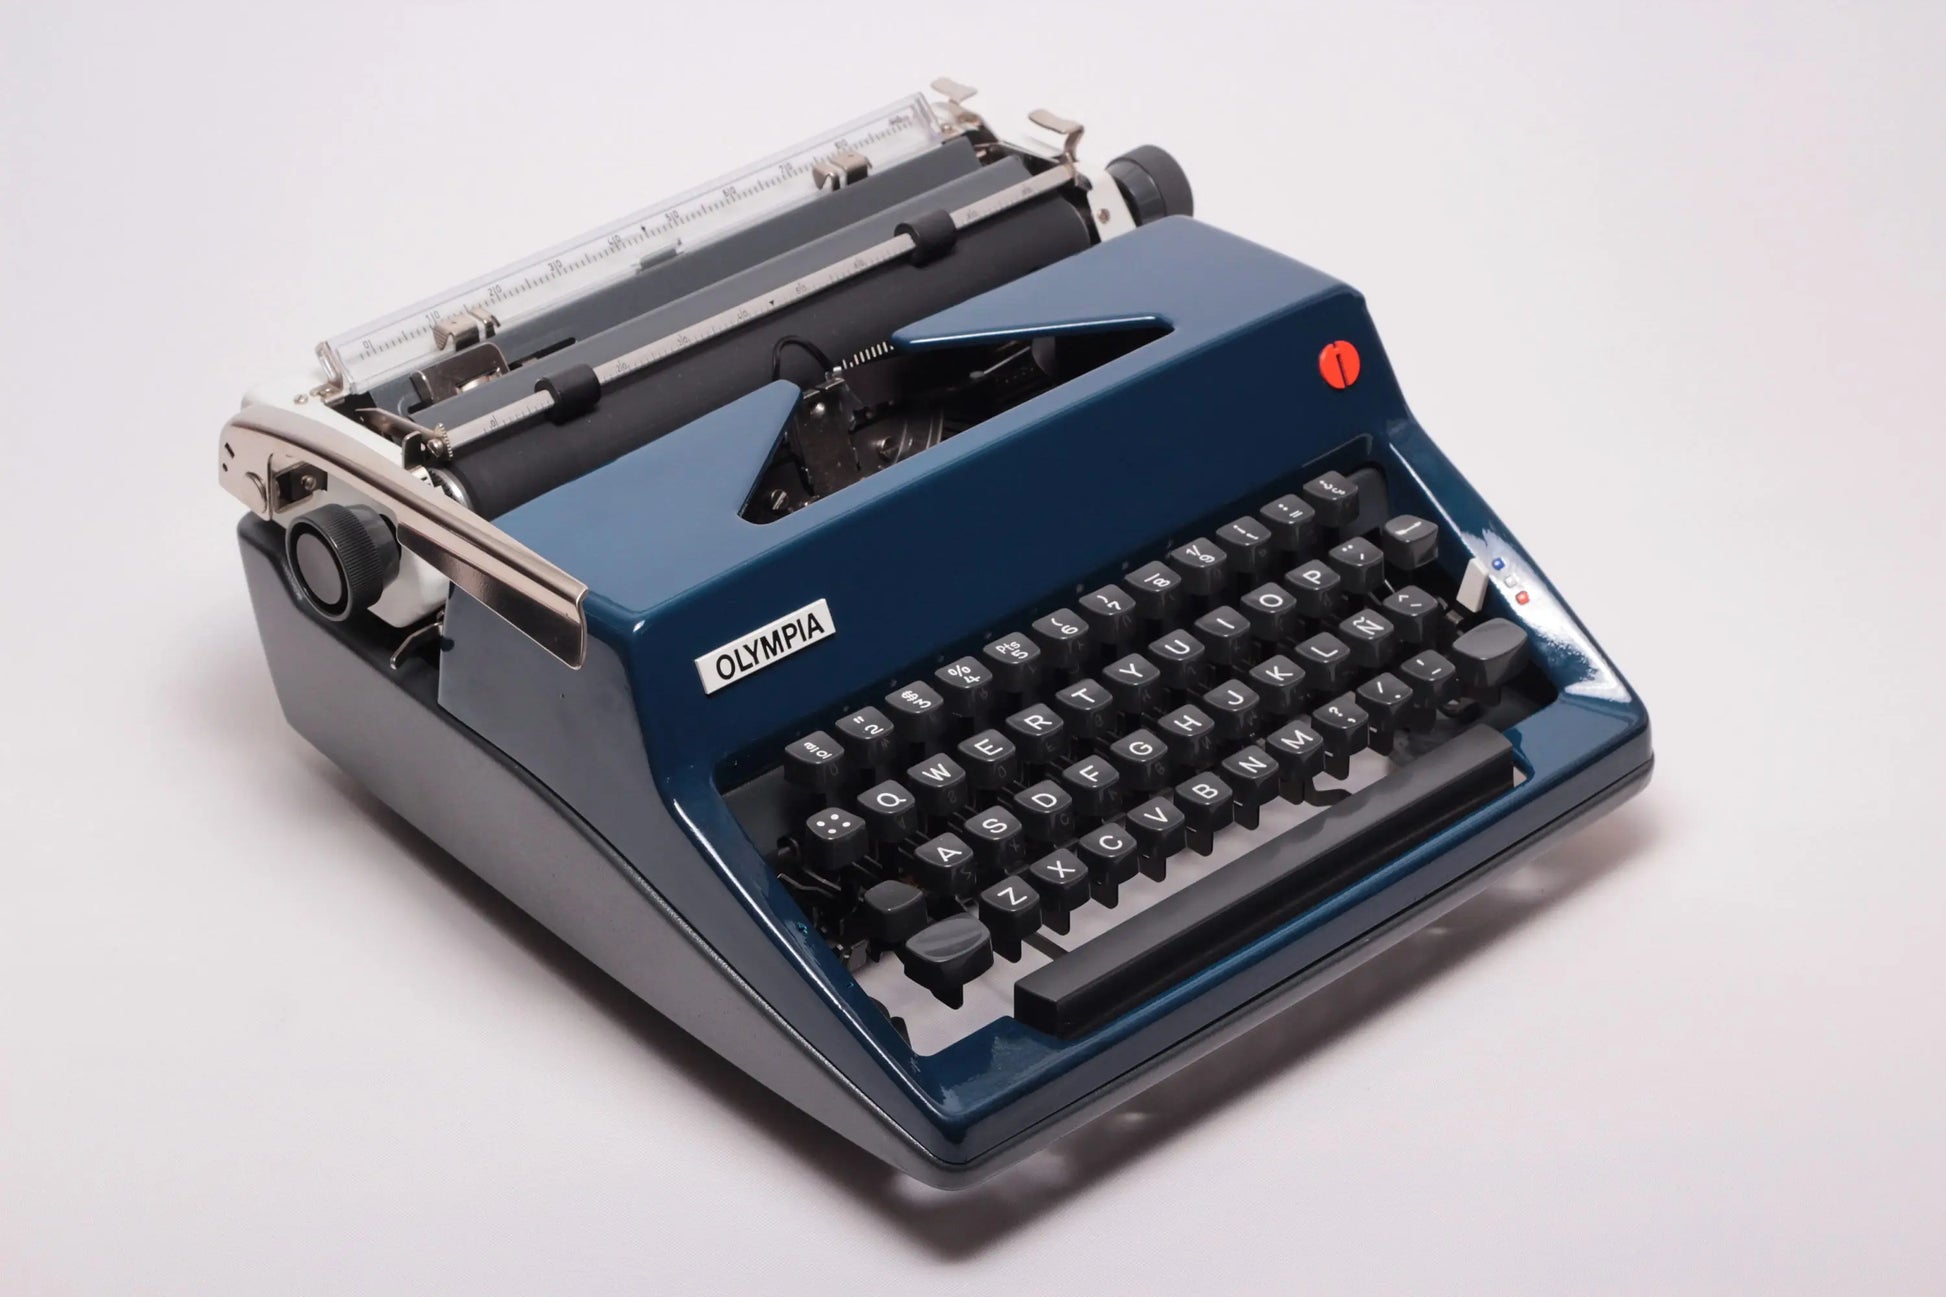 The Best Working typewriter - Olympia  SM - vintage working typewriter - custom made navy blue typewriter - qwerty - ElGranero Typewriter.Company